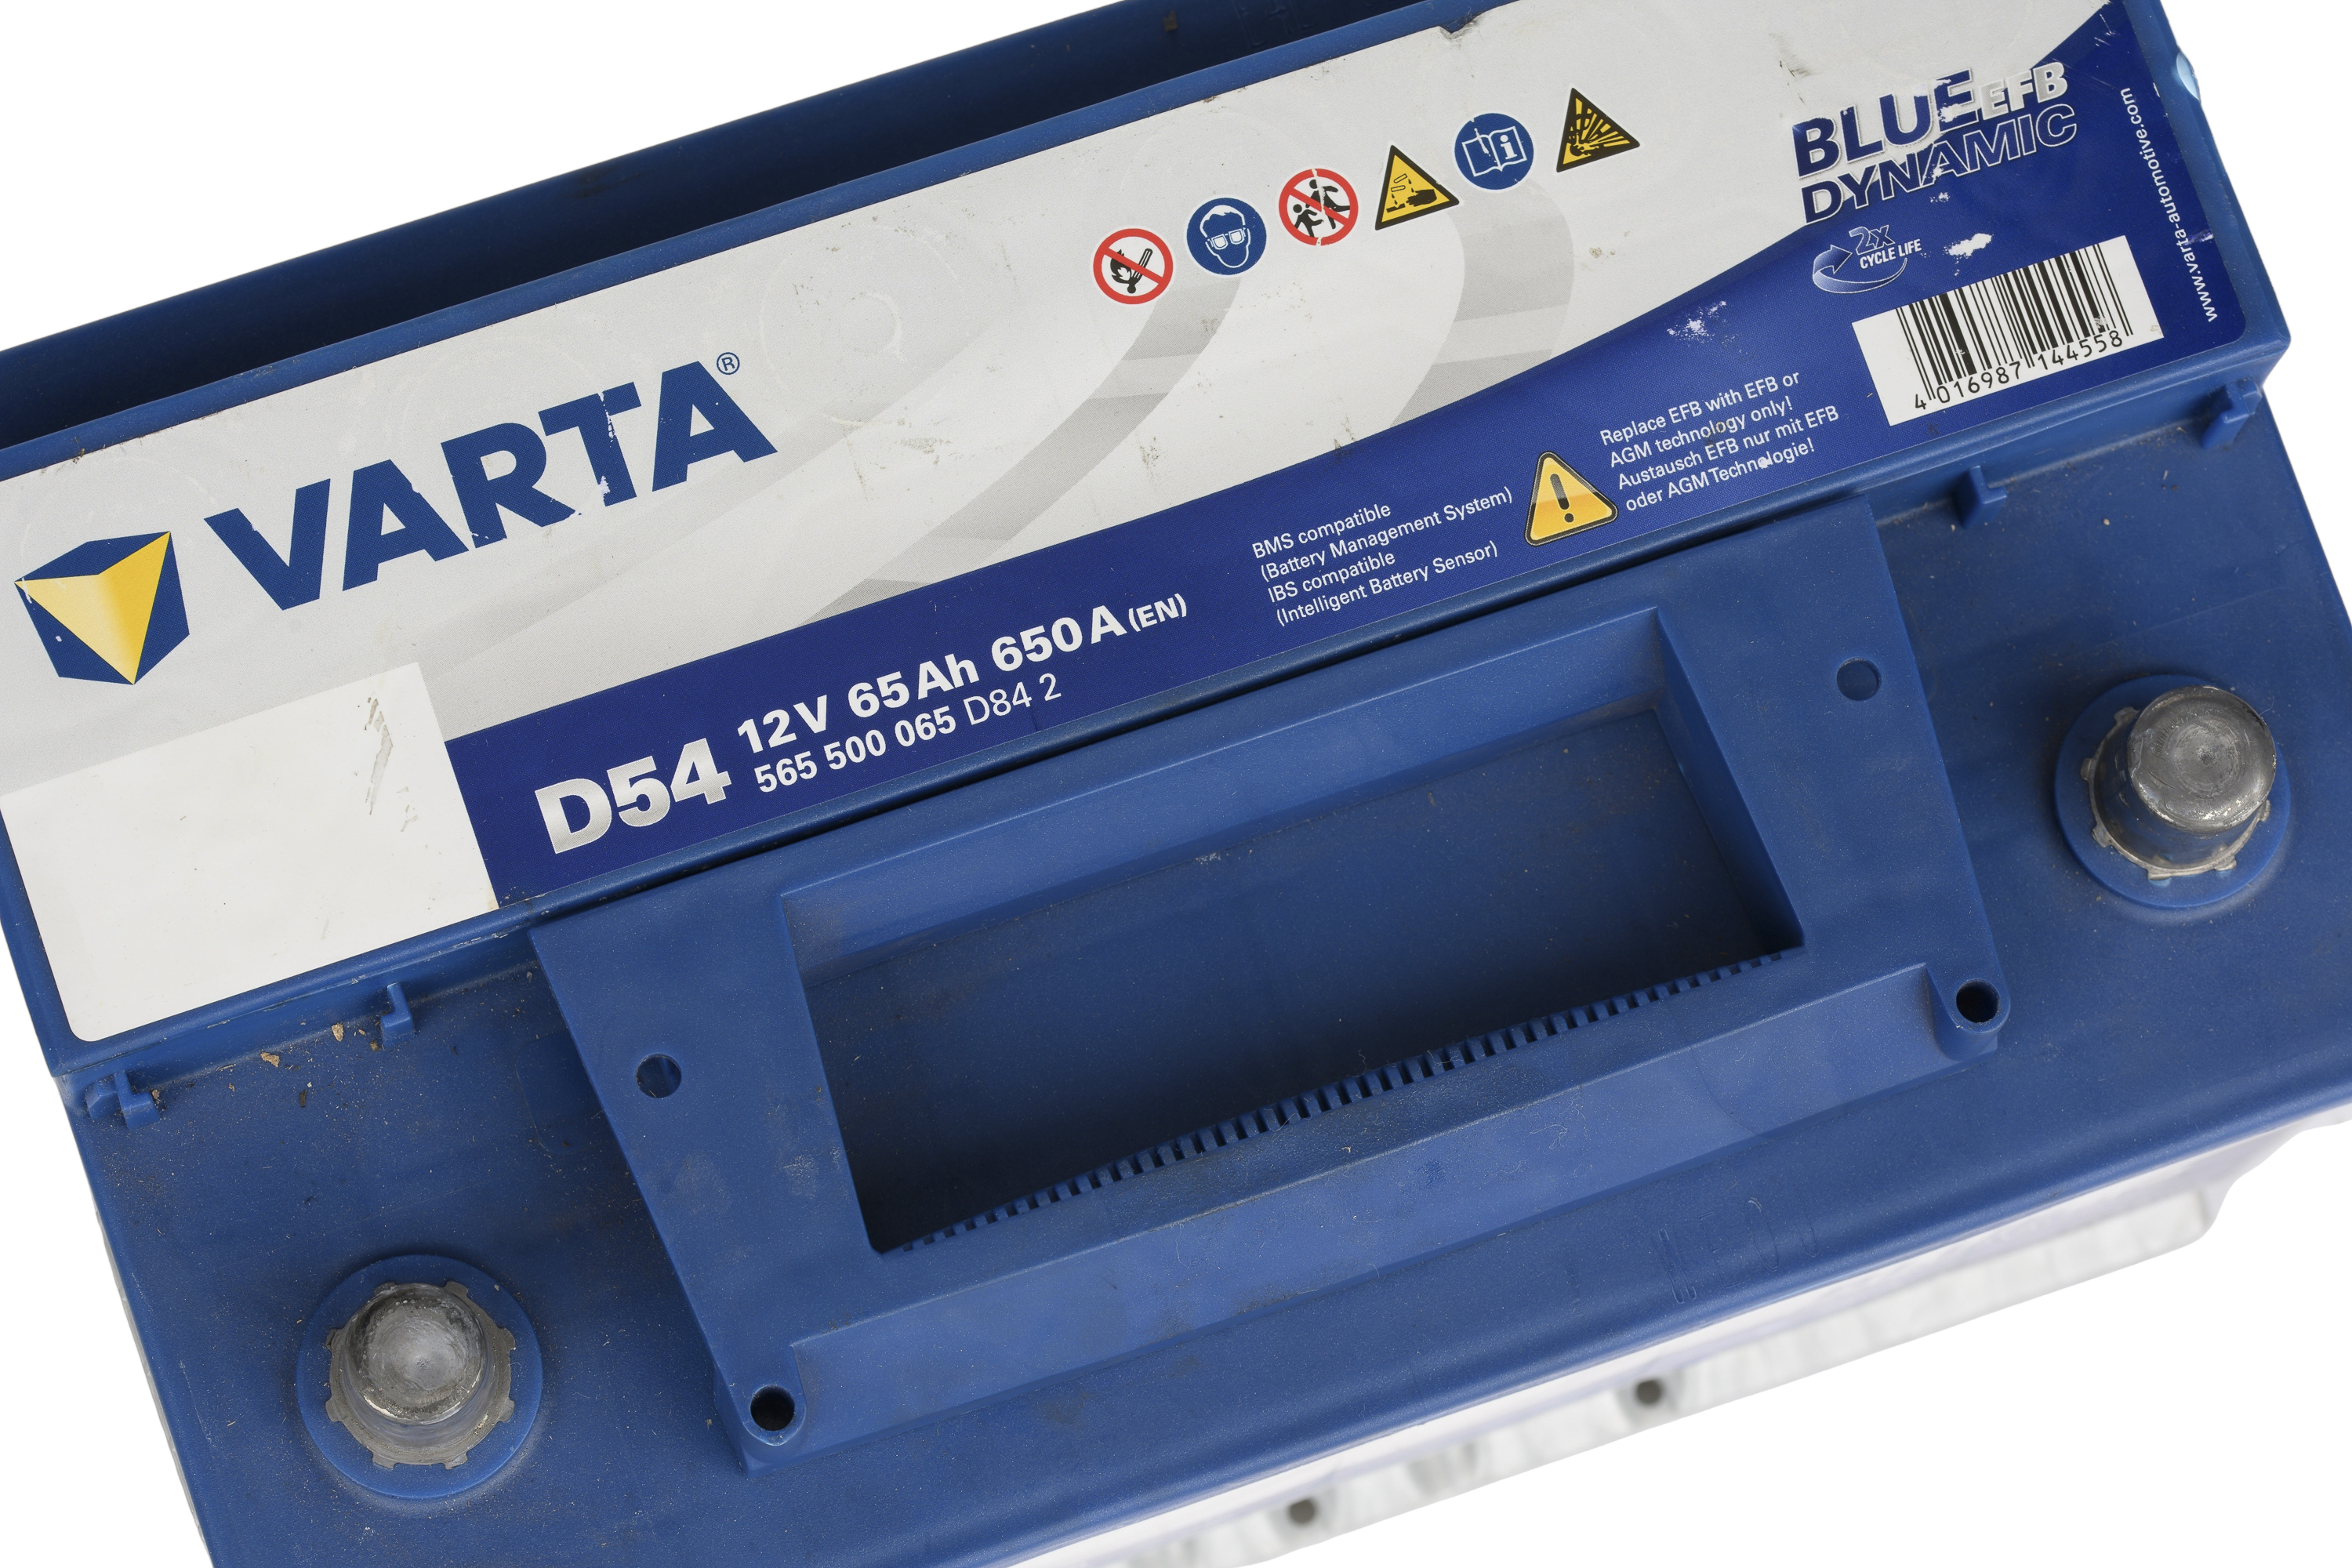 BATTERIE VARTA BLUE DYNAMIC D59 12V 60AH 540A - Batteries Auto